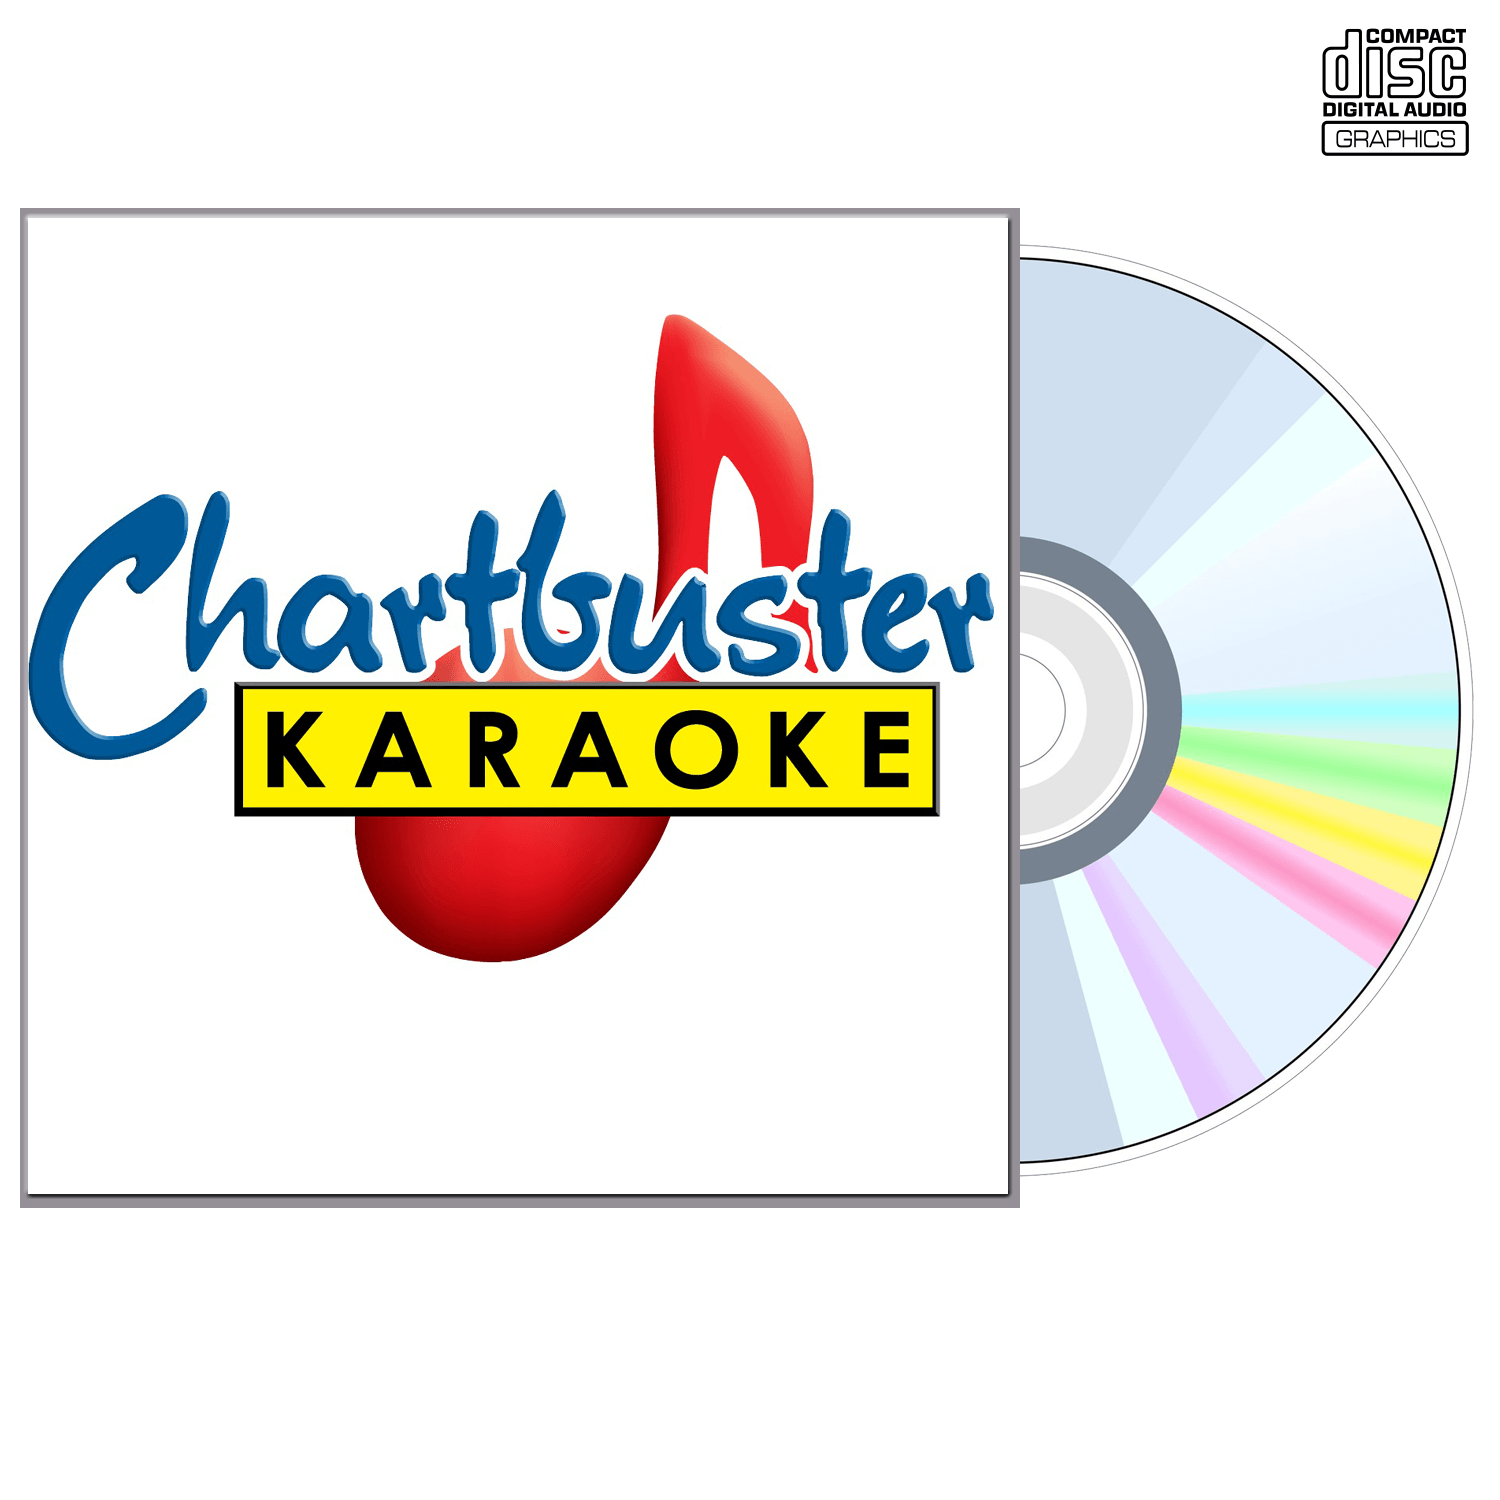 Rolling Stones - CD+G - Chartbuster Karaoke - Karaoke Home Entertainment